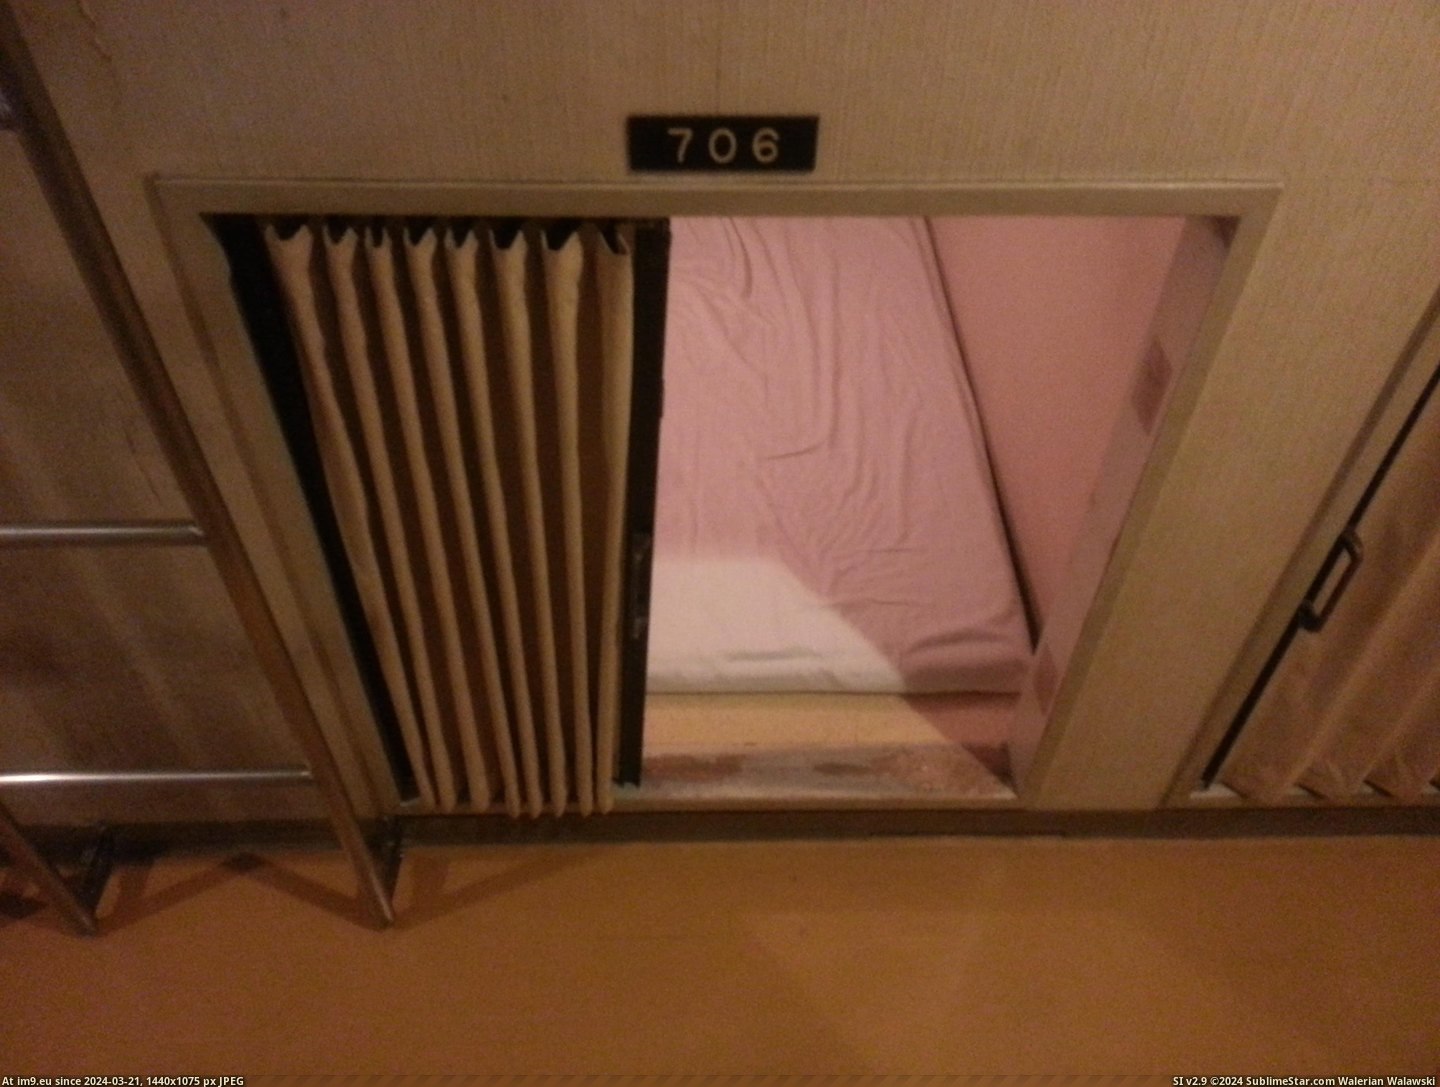 #Long #Hotel #Capsule #Week #Tokyo [Pics] My week-long home at a Tokyo capsule hotel 2 Pic. (Изображение из альбом My r/PICS favs))